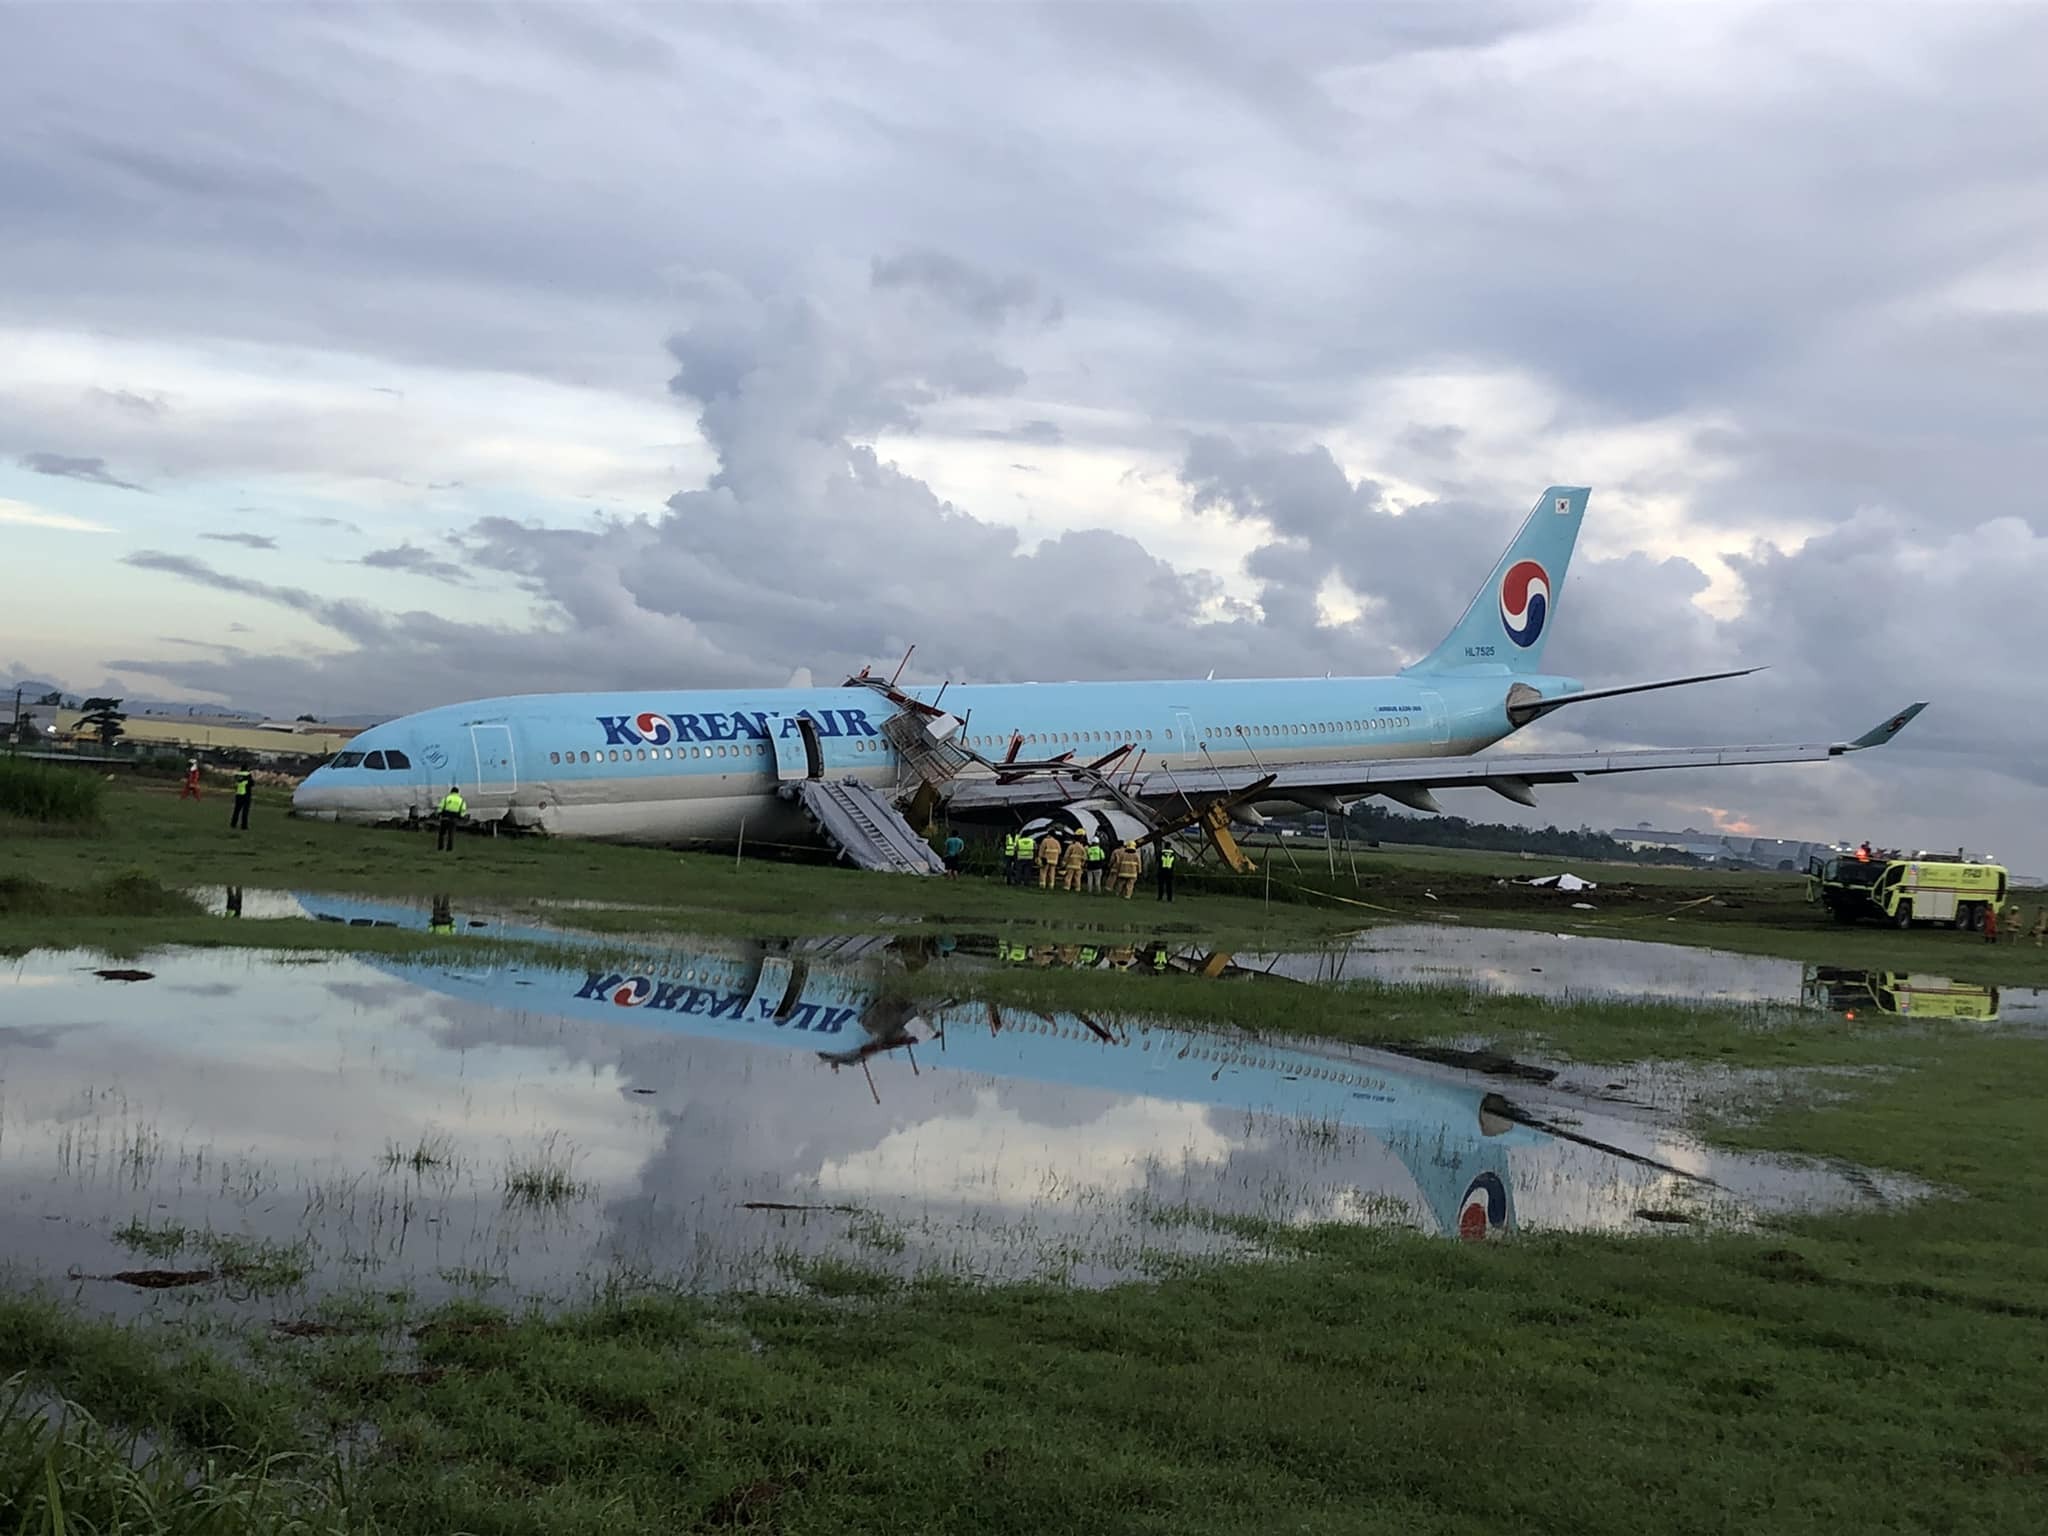 Korean Air Flight KE631 after crashing in the Philippines. 